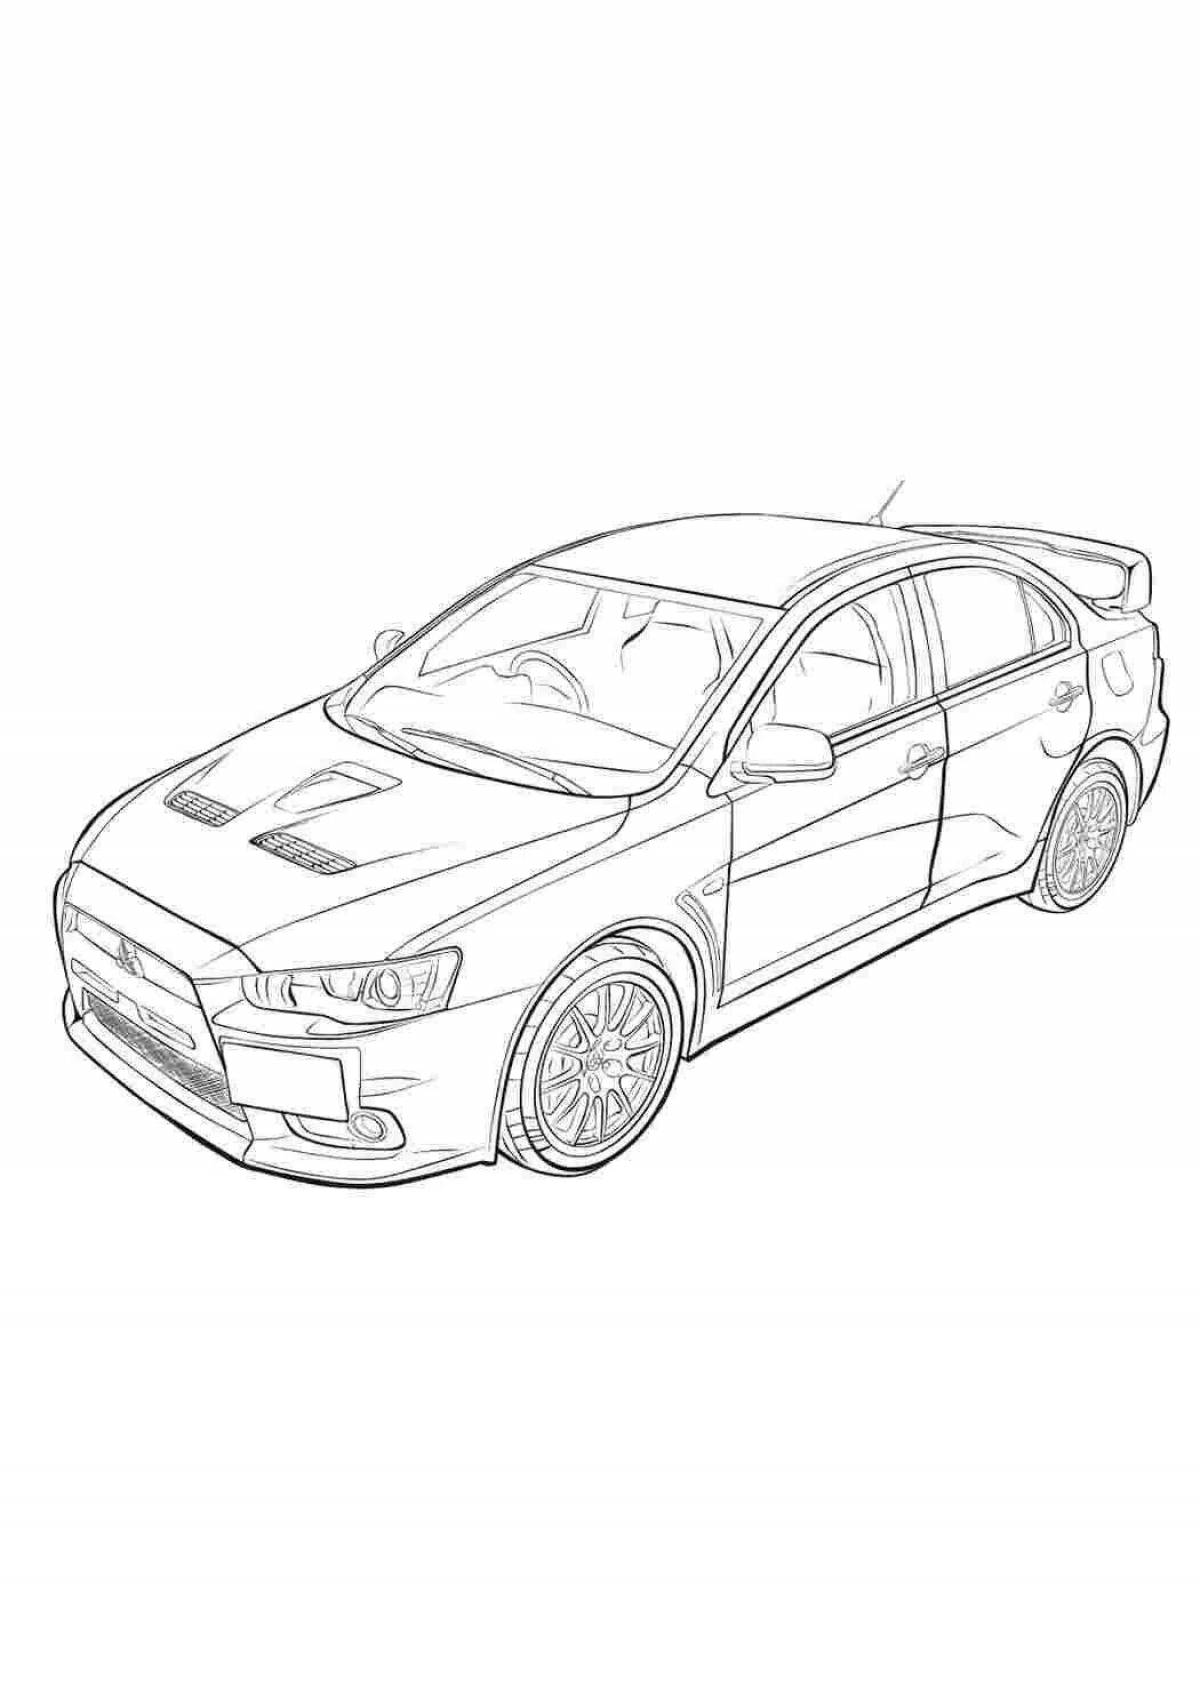 Subaru shining car coloring page